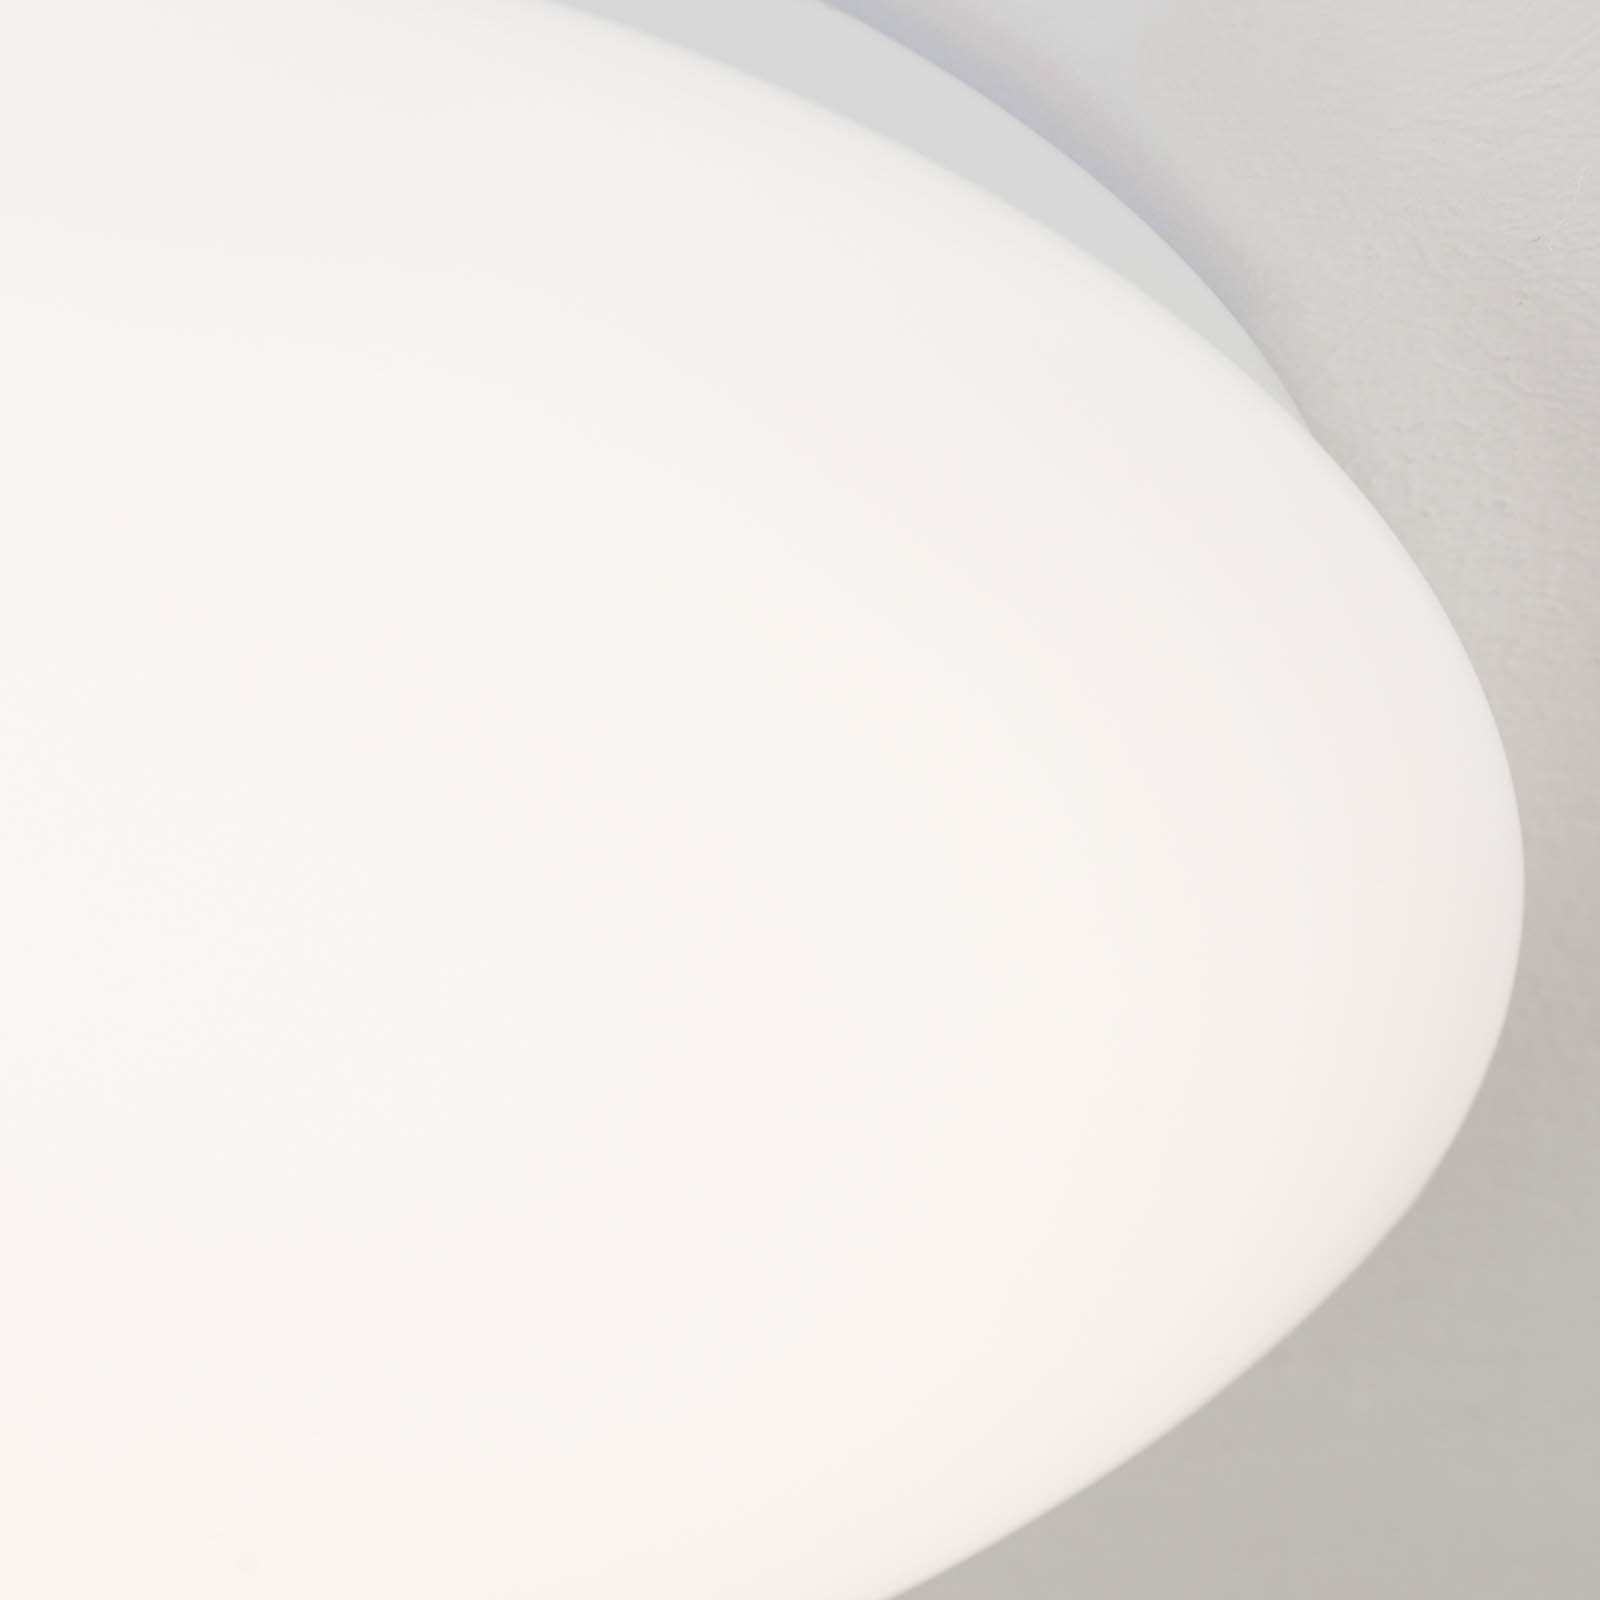 LED-taklampe Nedo buet, Ø 28,5 cm